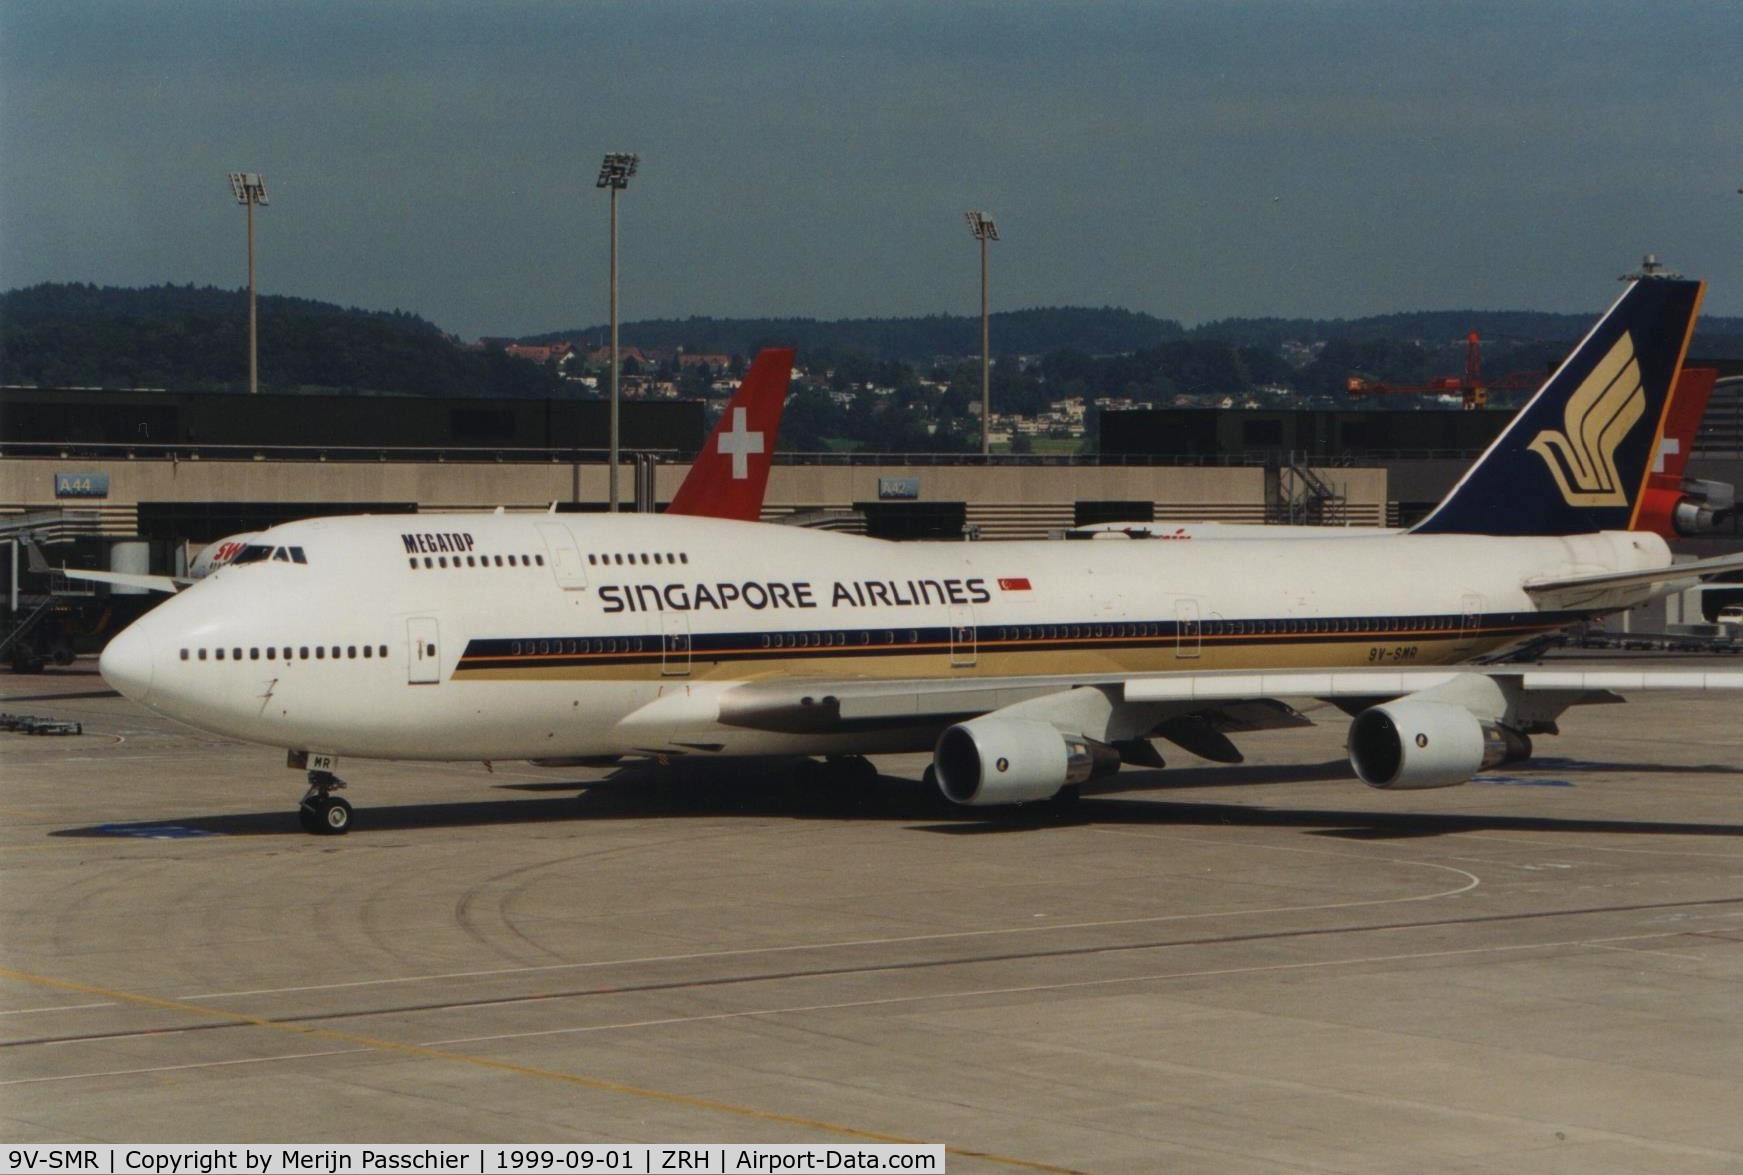 9V-SMR, 1993 Boeing 747-412BCF C/N 27133, bought photo